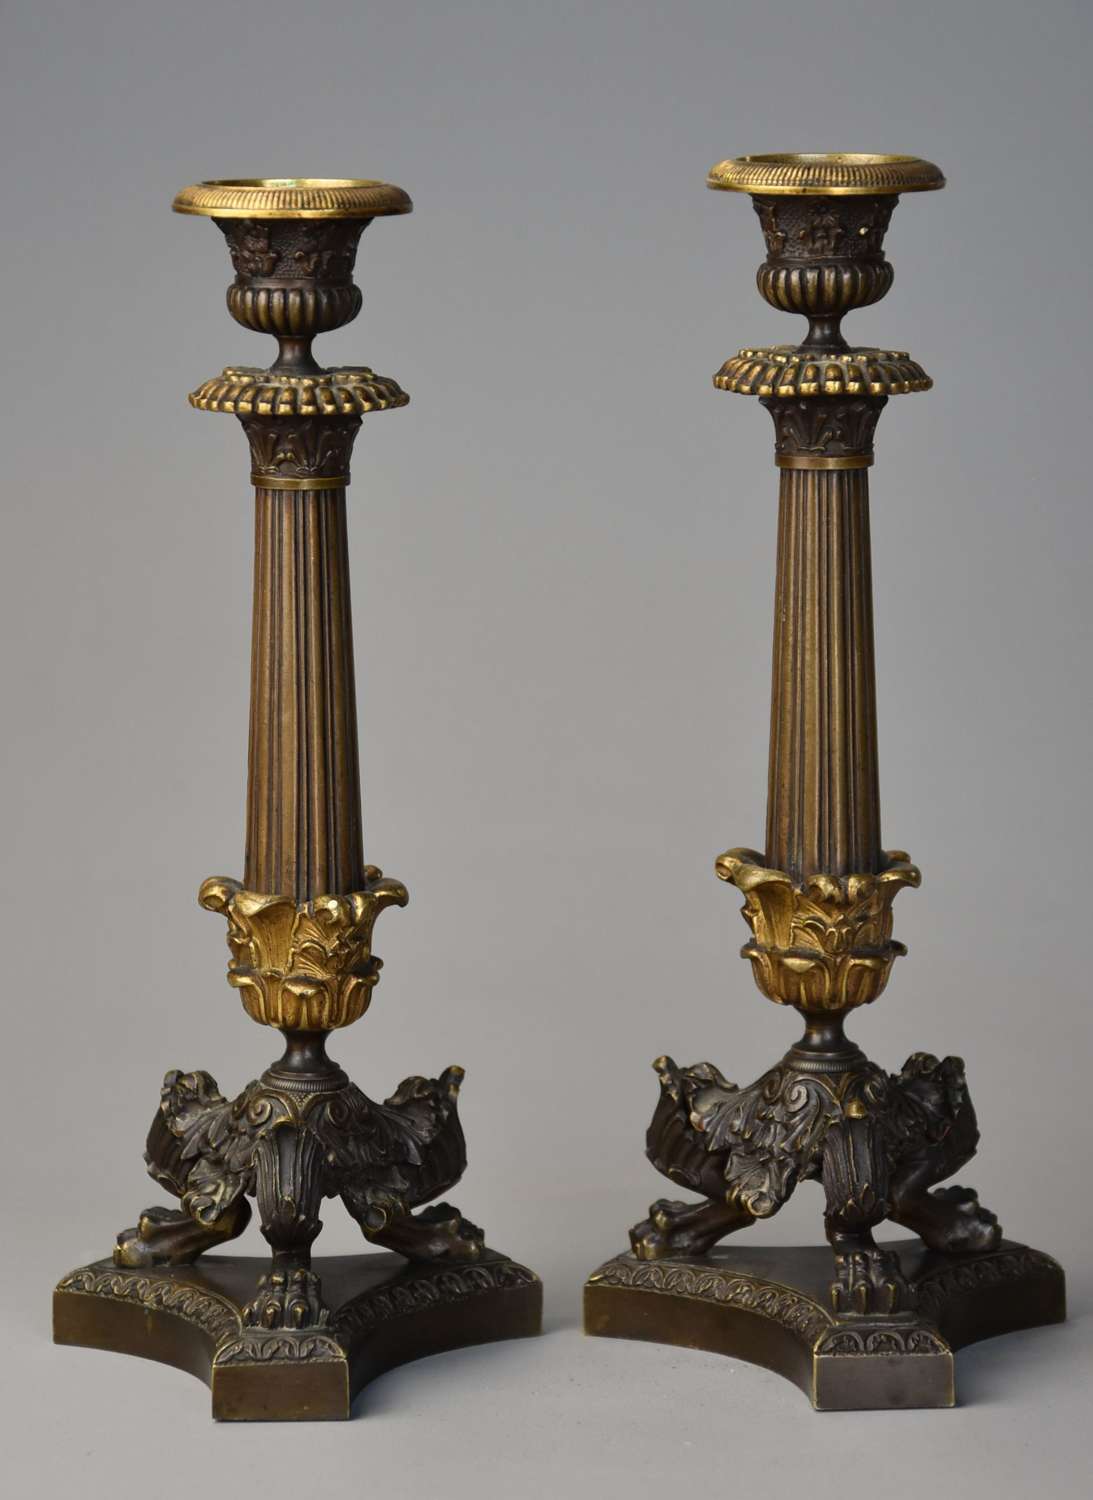 Fine quality pair of Regency bronze and gilt bronze candlesticks